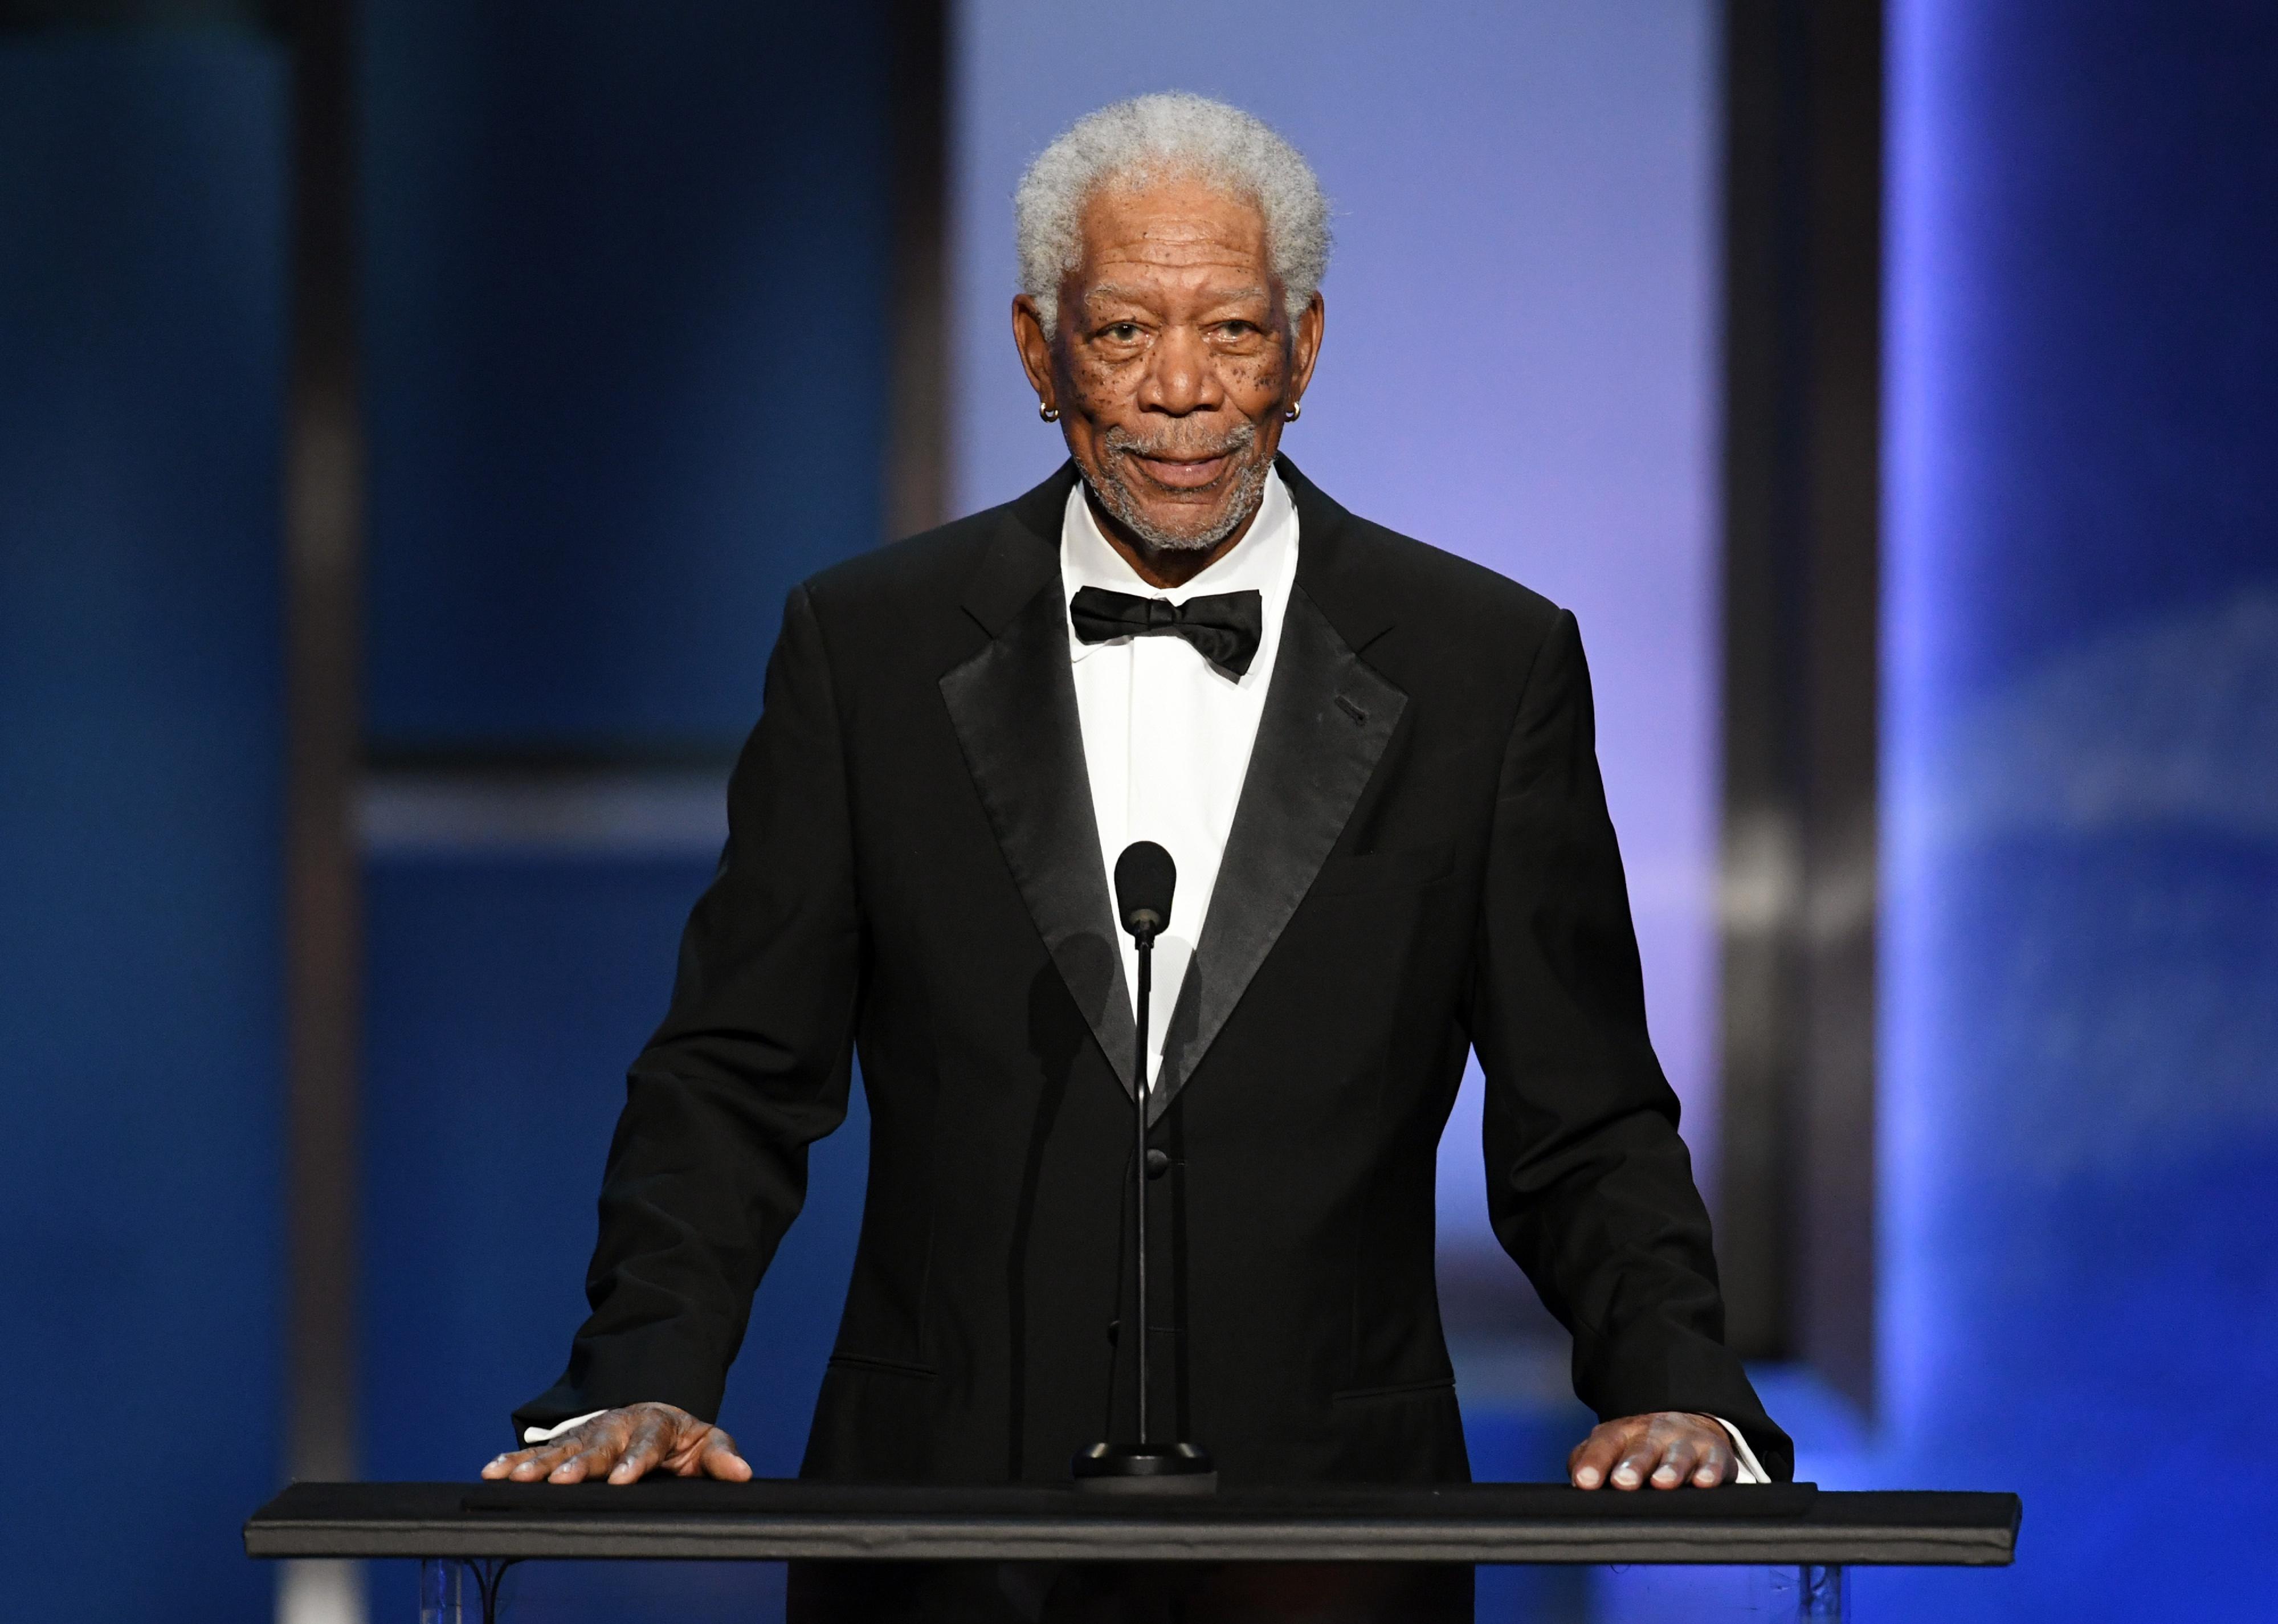 Morgan Freeman in a black suit and bowtie onstage behind a podium.